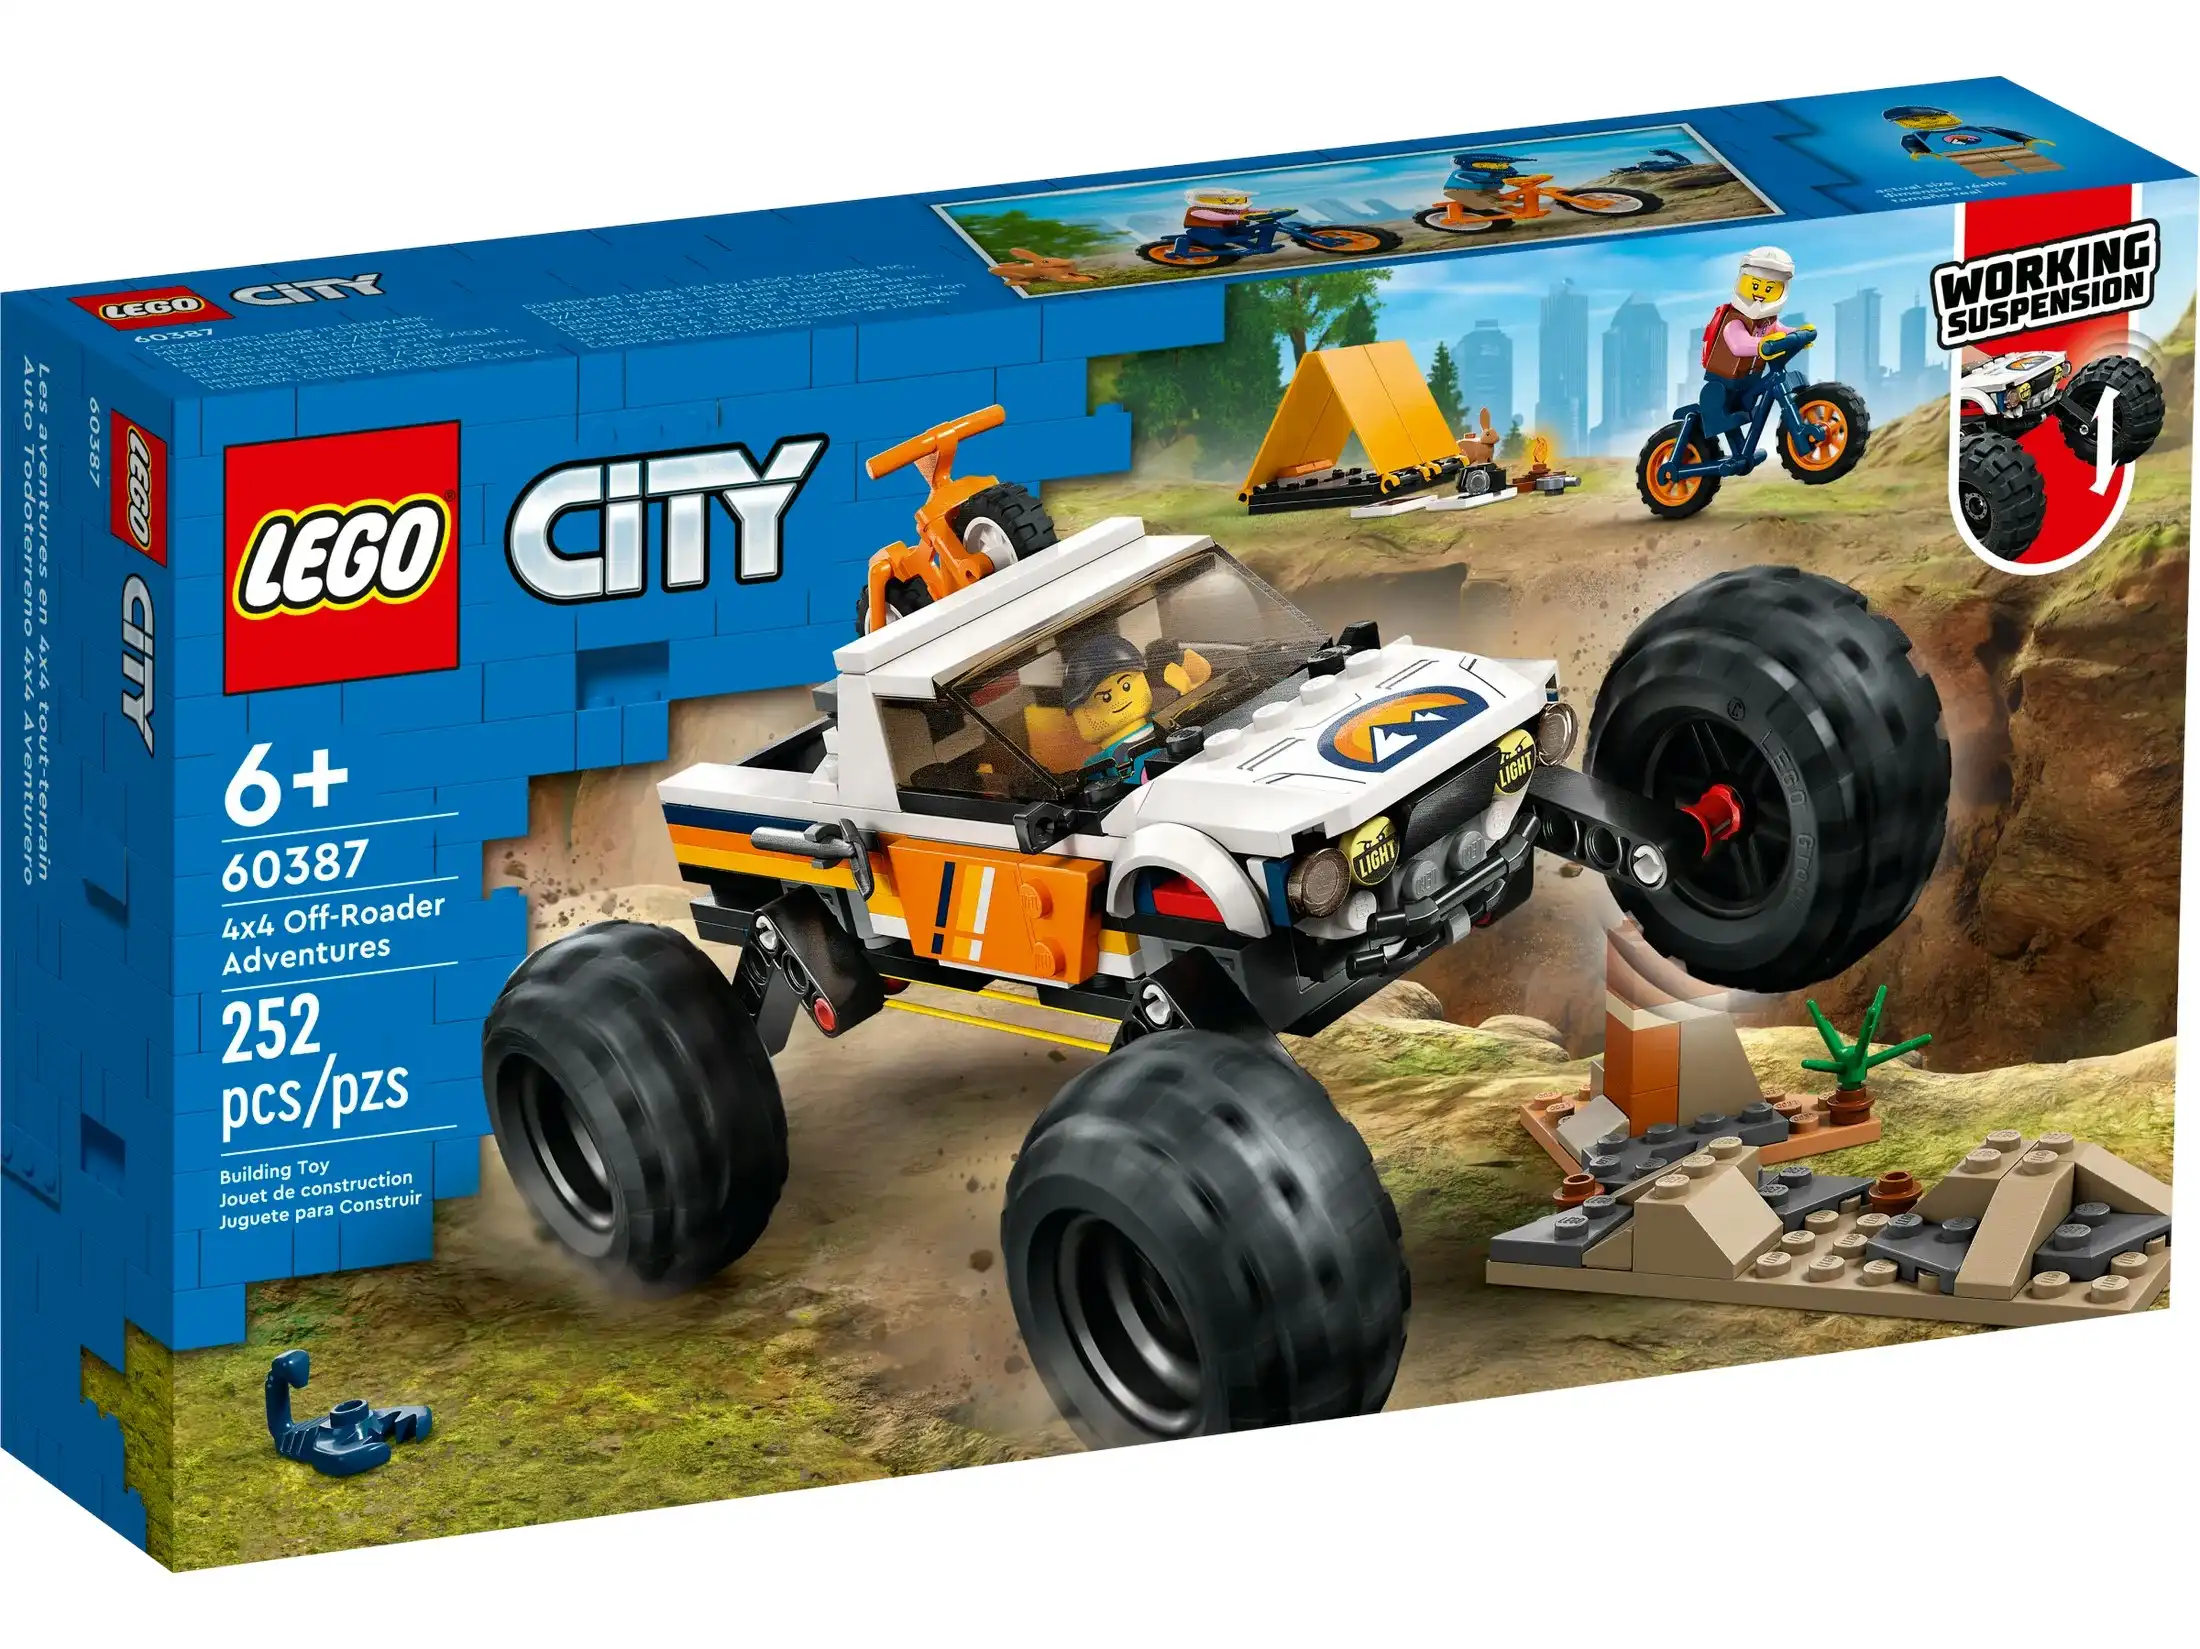 LEGO 60387 4x4 Off-Roader Adventures - City